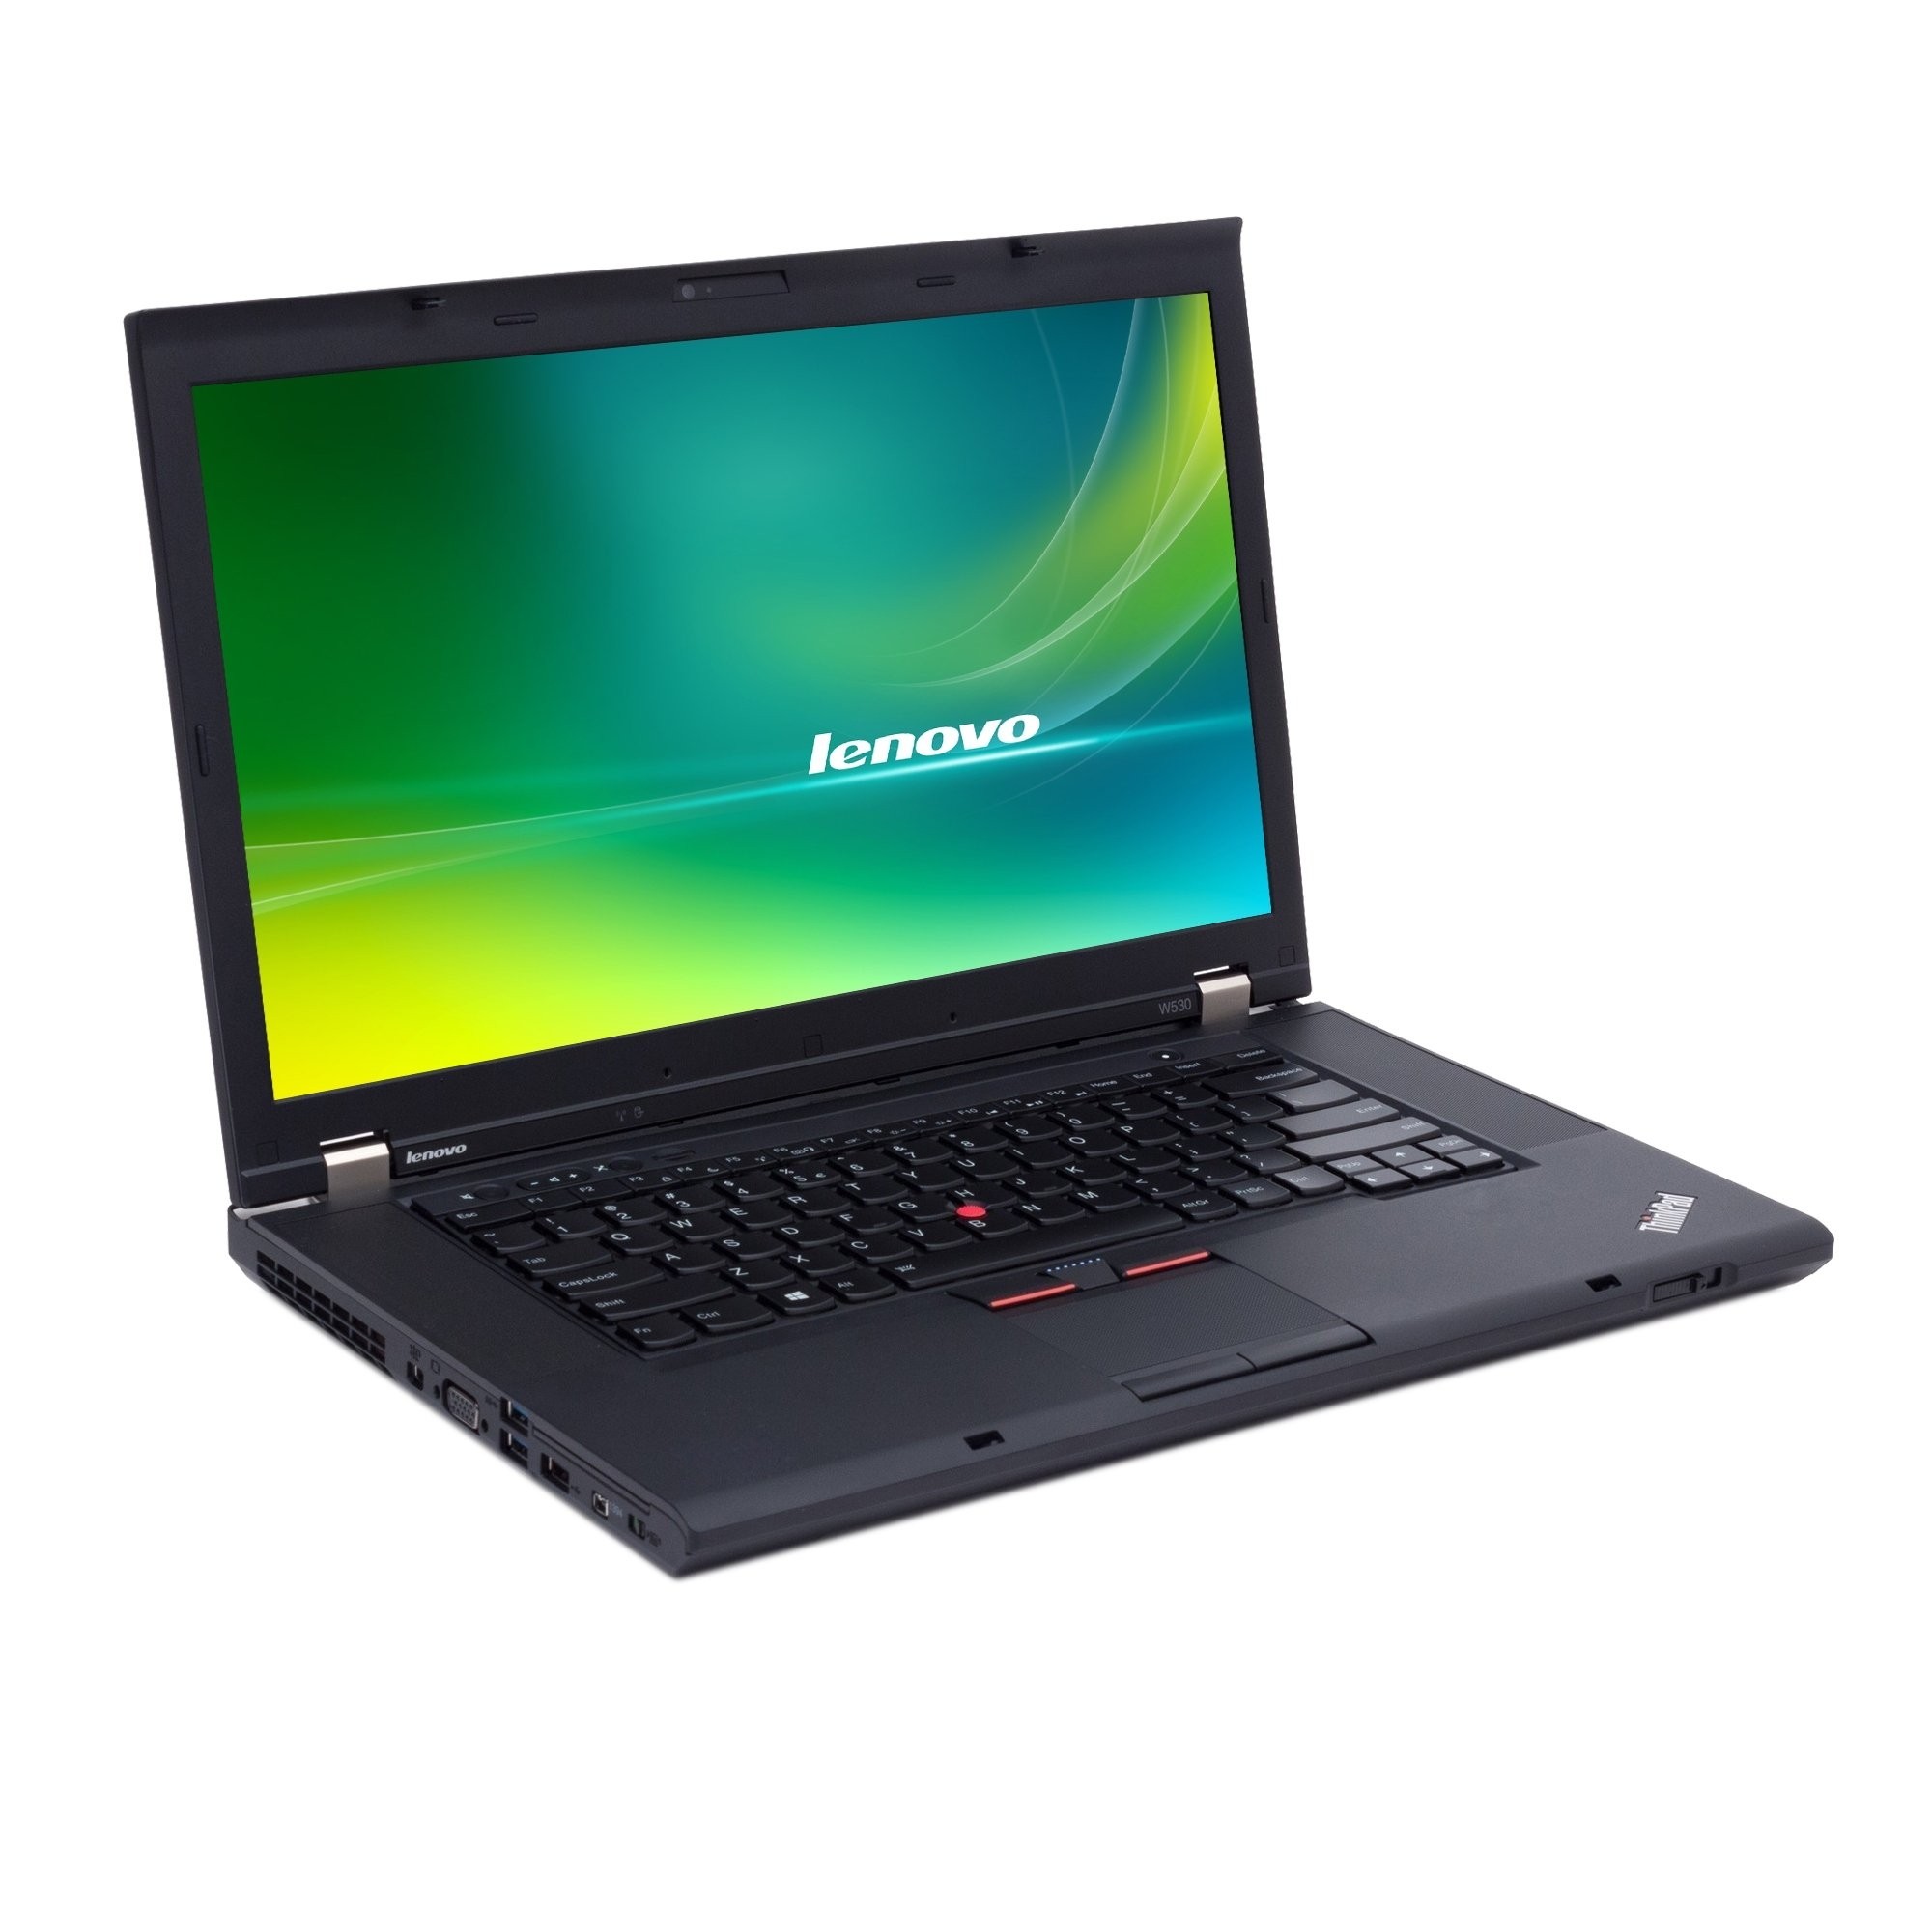 Lenovo ThinkPad W530 15.6" Laptop